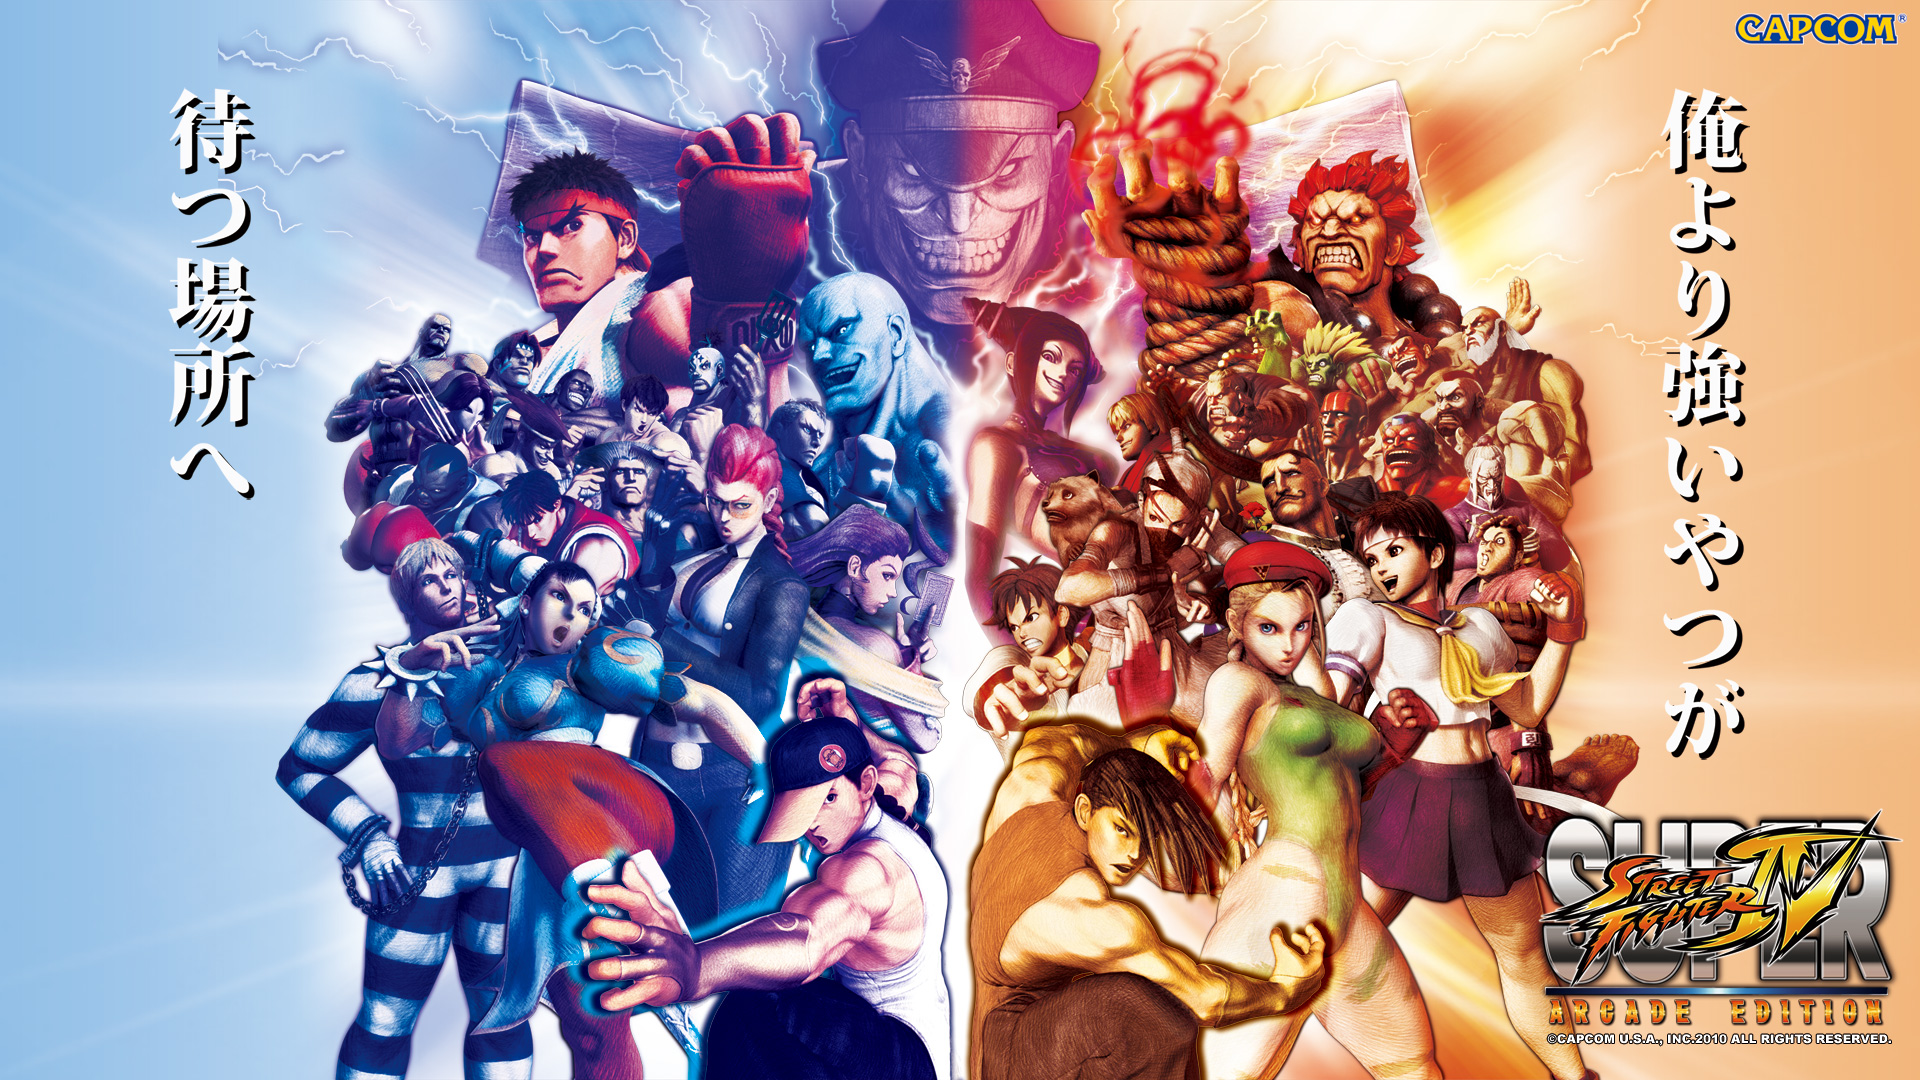 Super Street Fighter IV: Arcade Edition #15